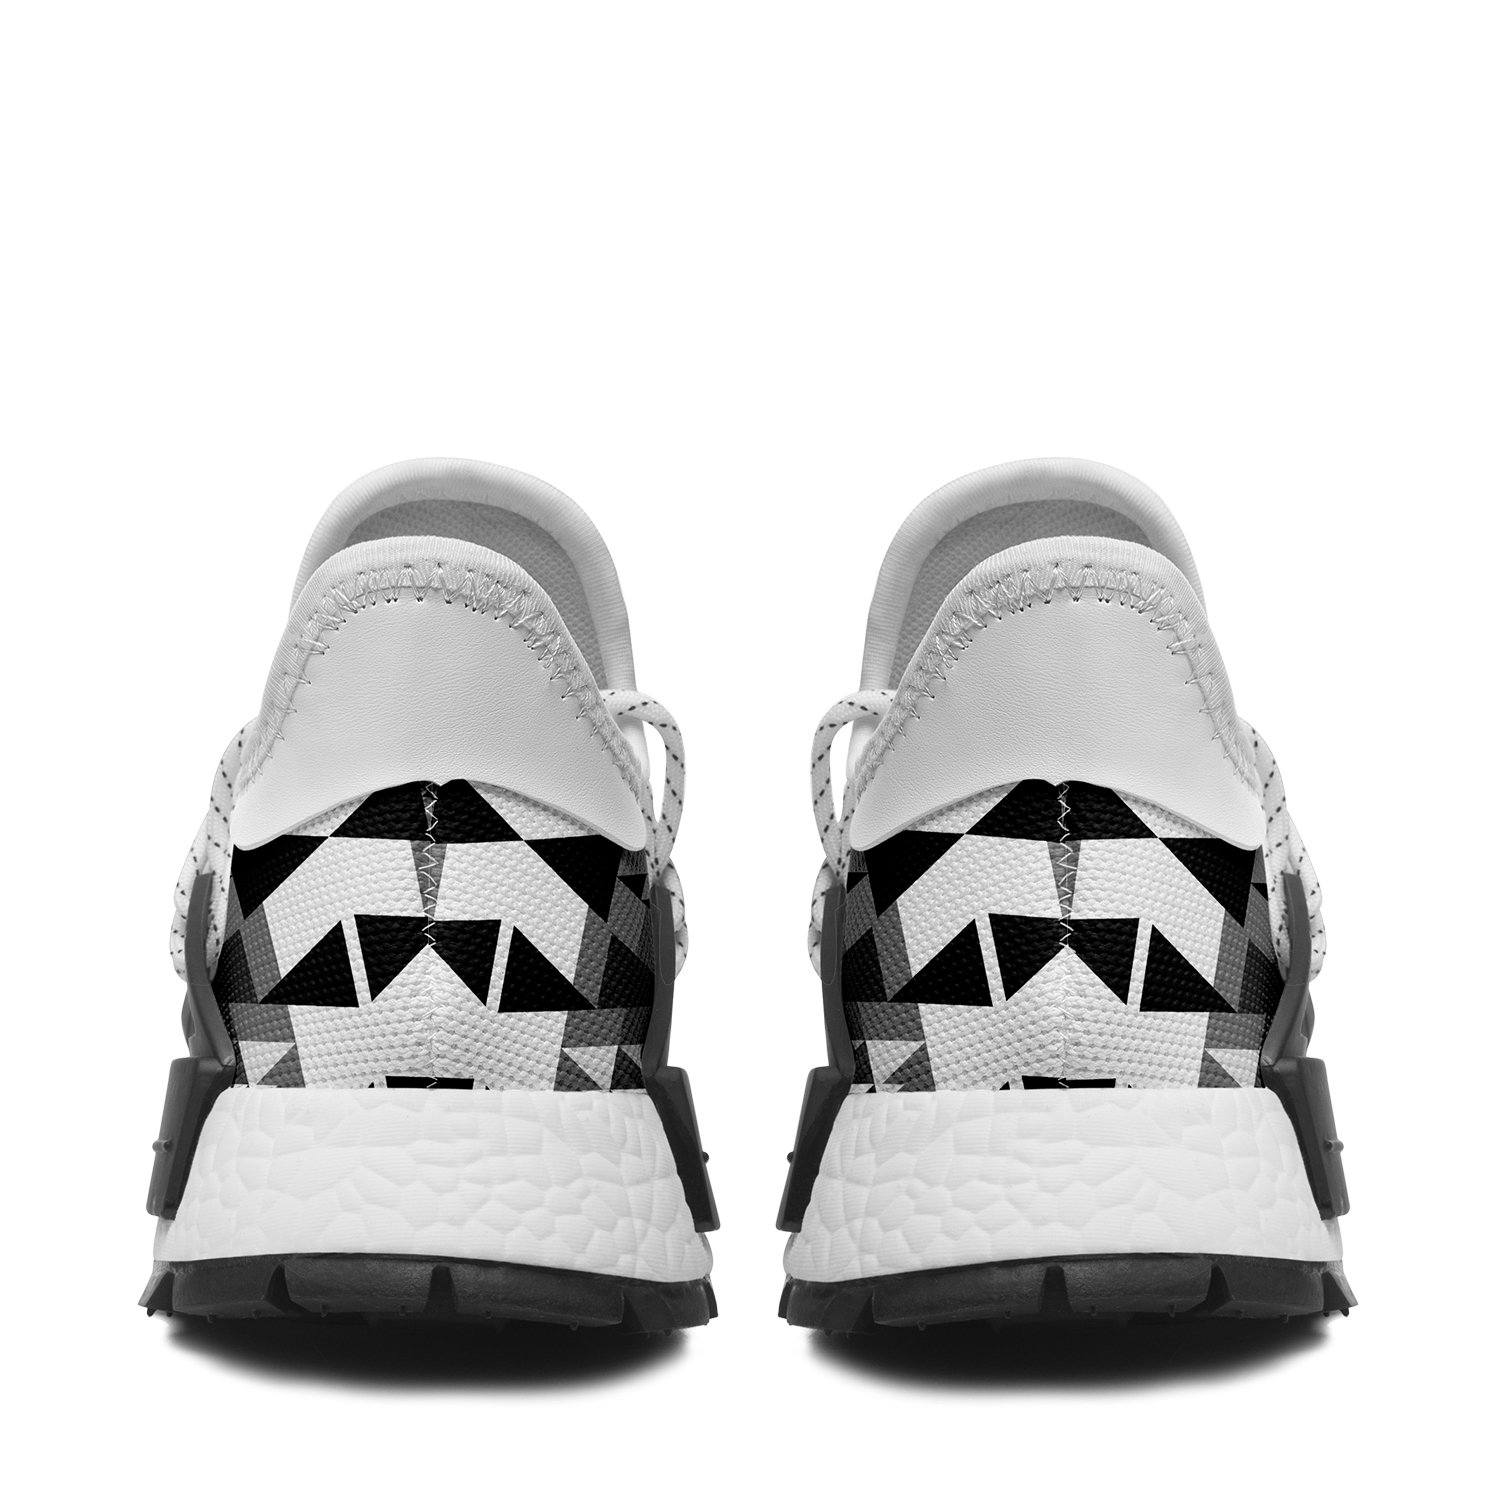 Writing on Stone Black and White Okaki Sneakers Shoes 49 Dzine 